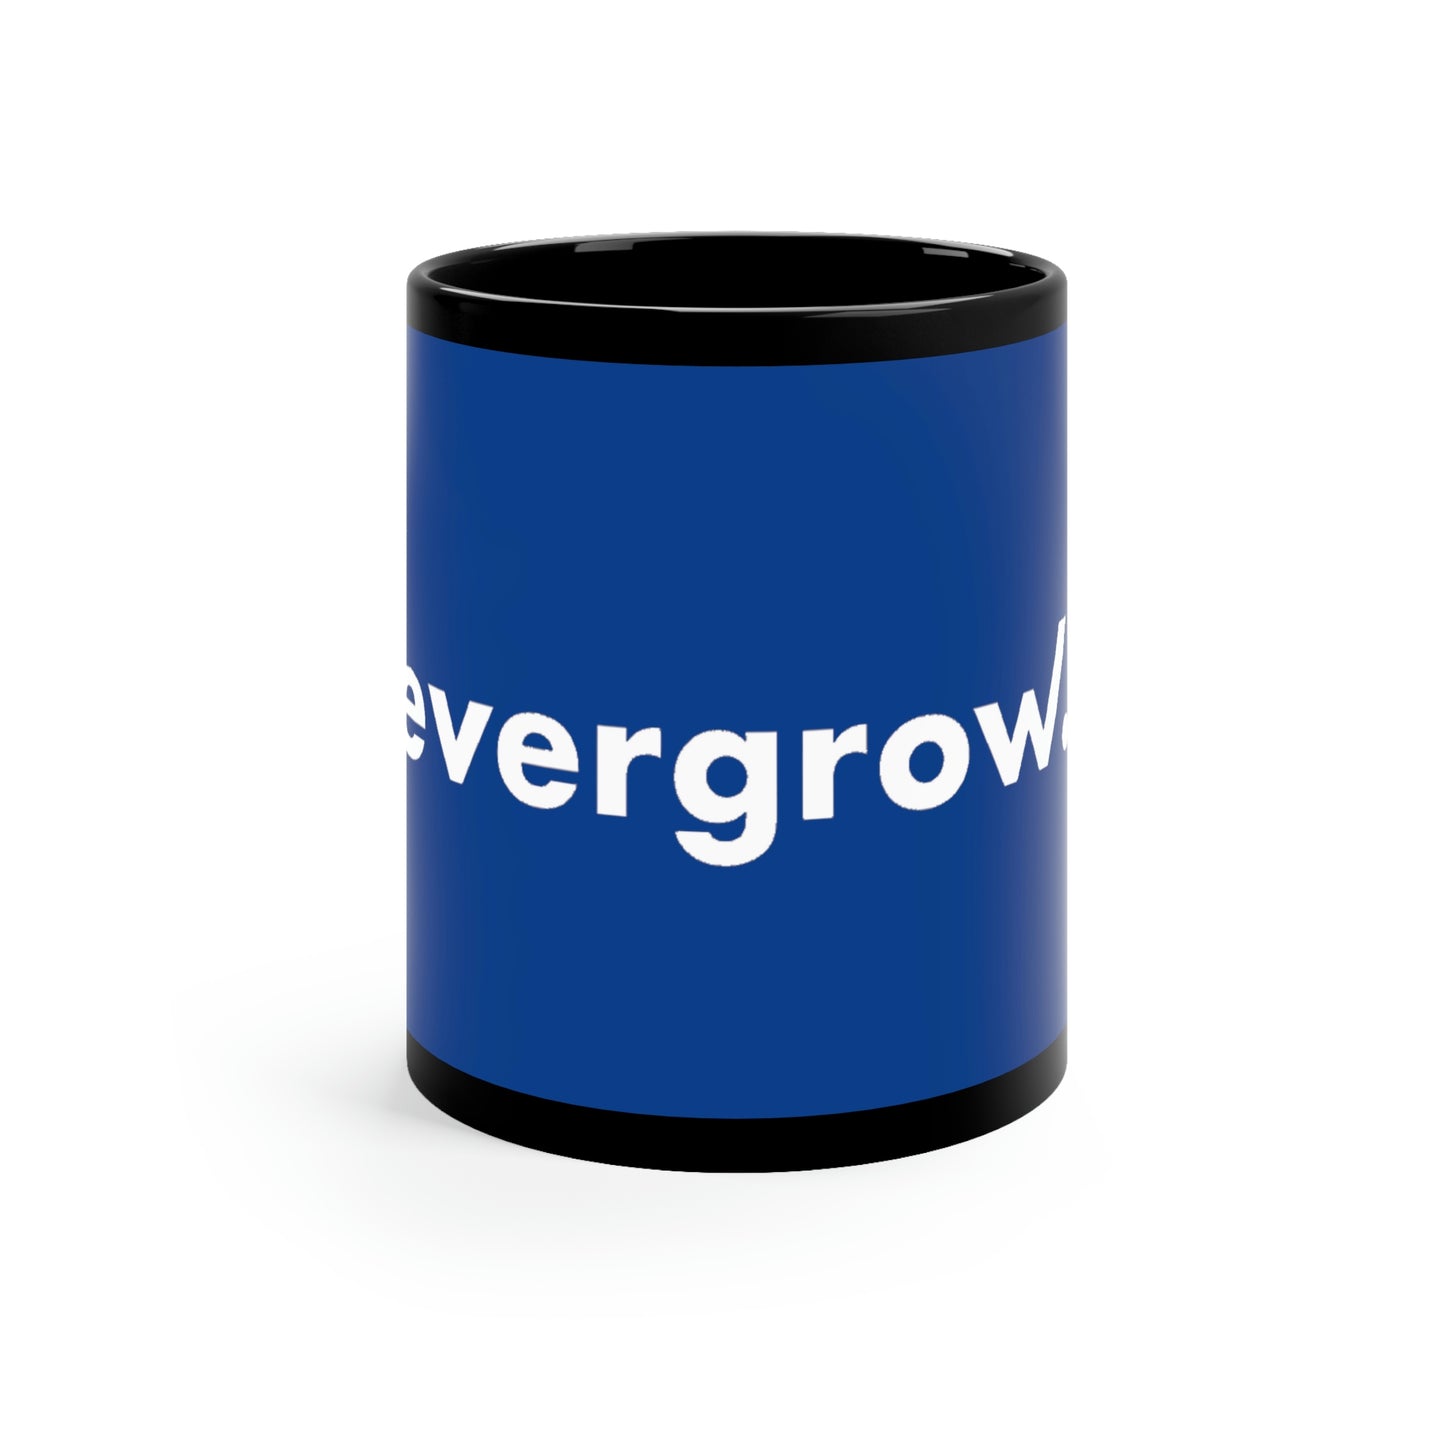 USA - 11oz Black Mug in Dark Blue with evergrow in white